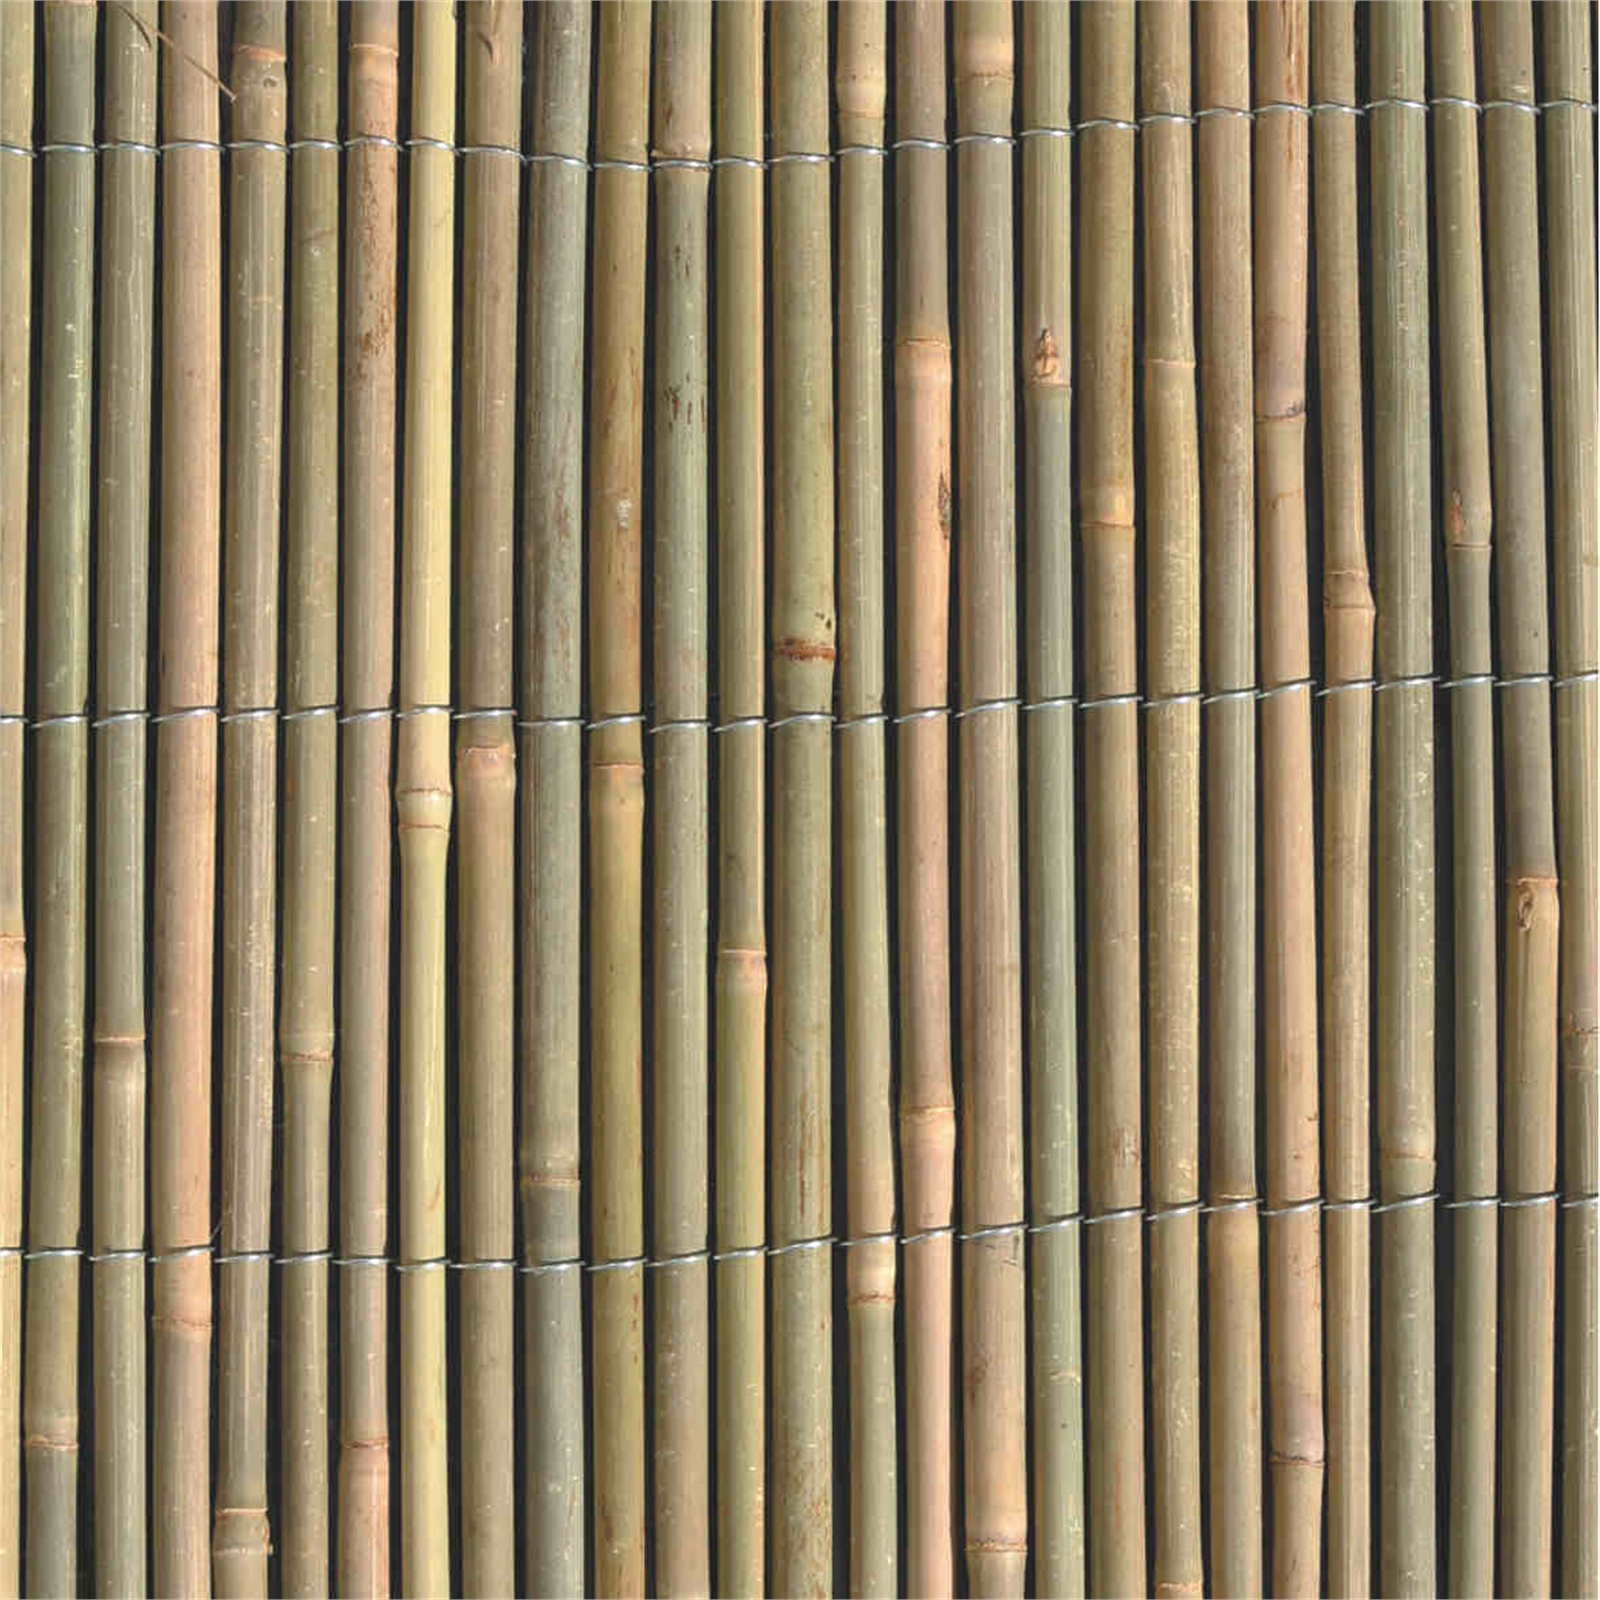 Garden Trend 3 x 1.5m Round Bamboo Fence Screening